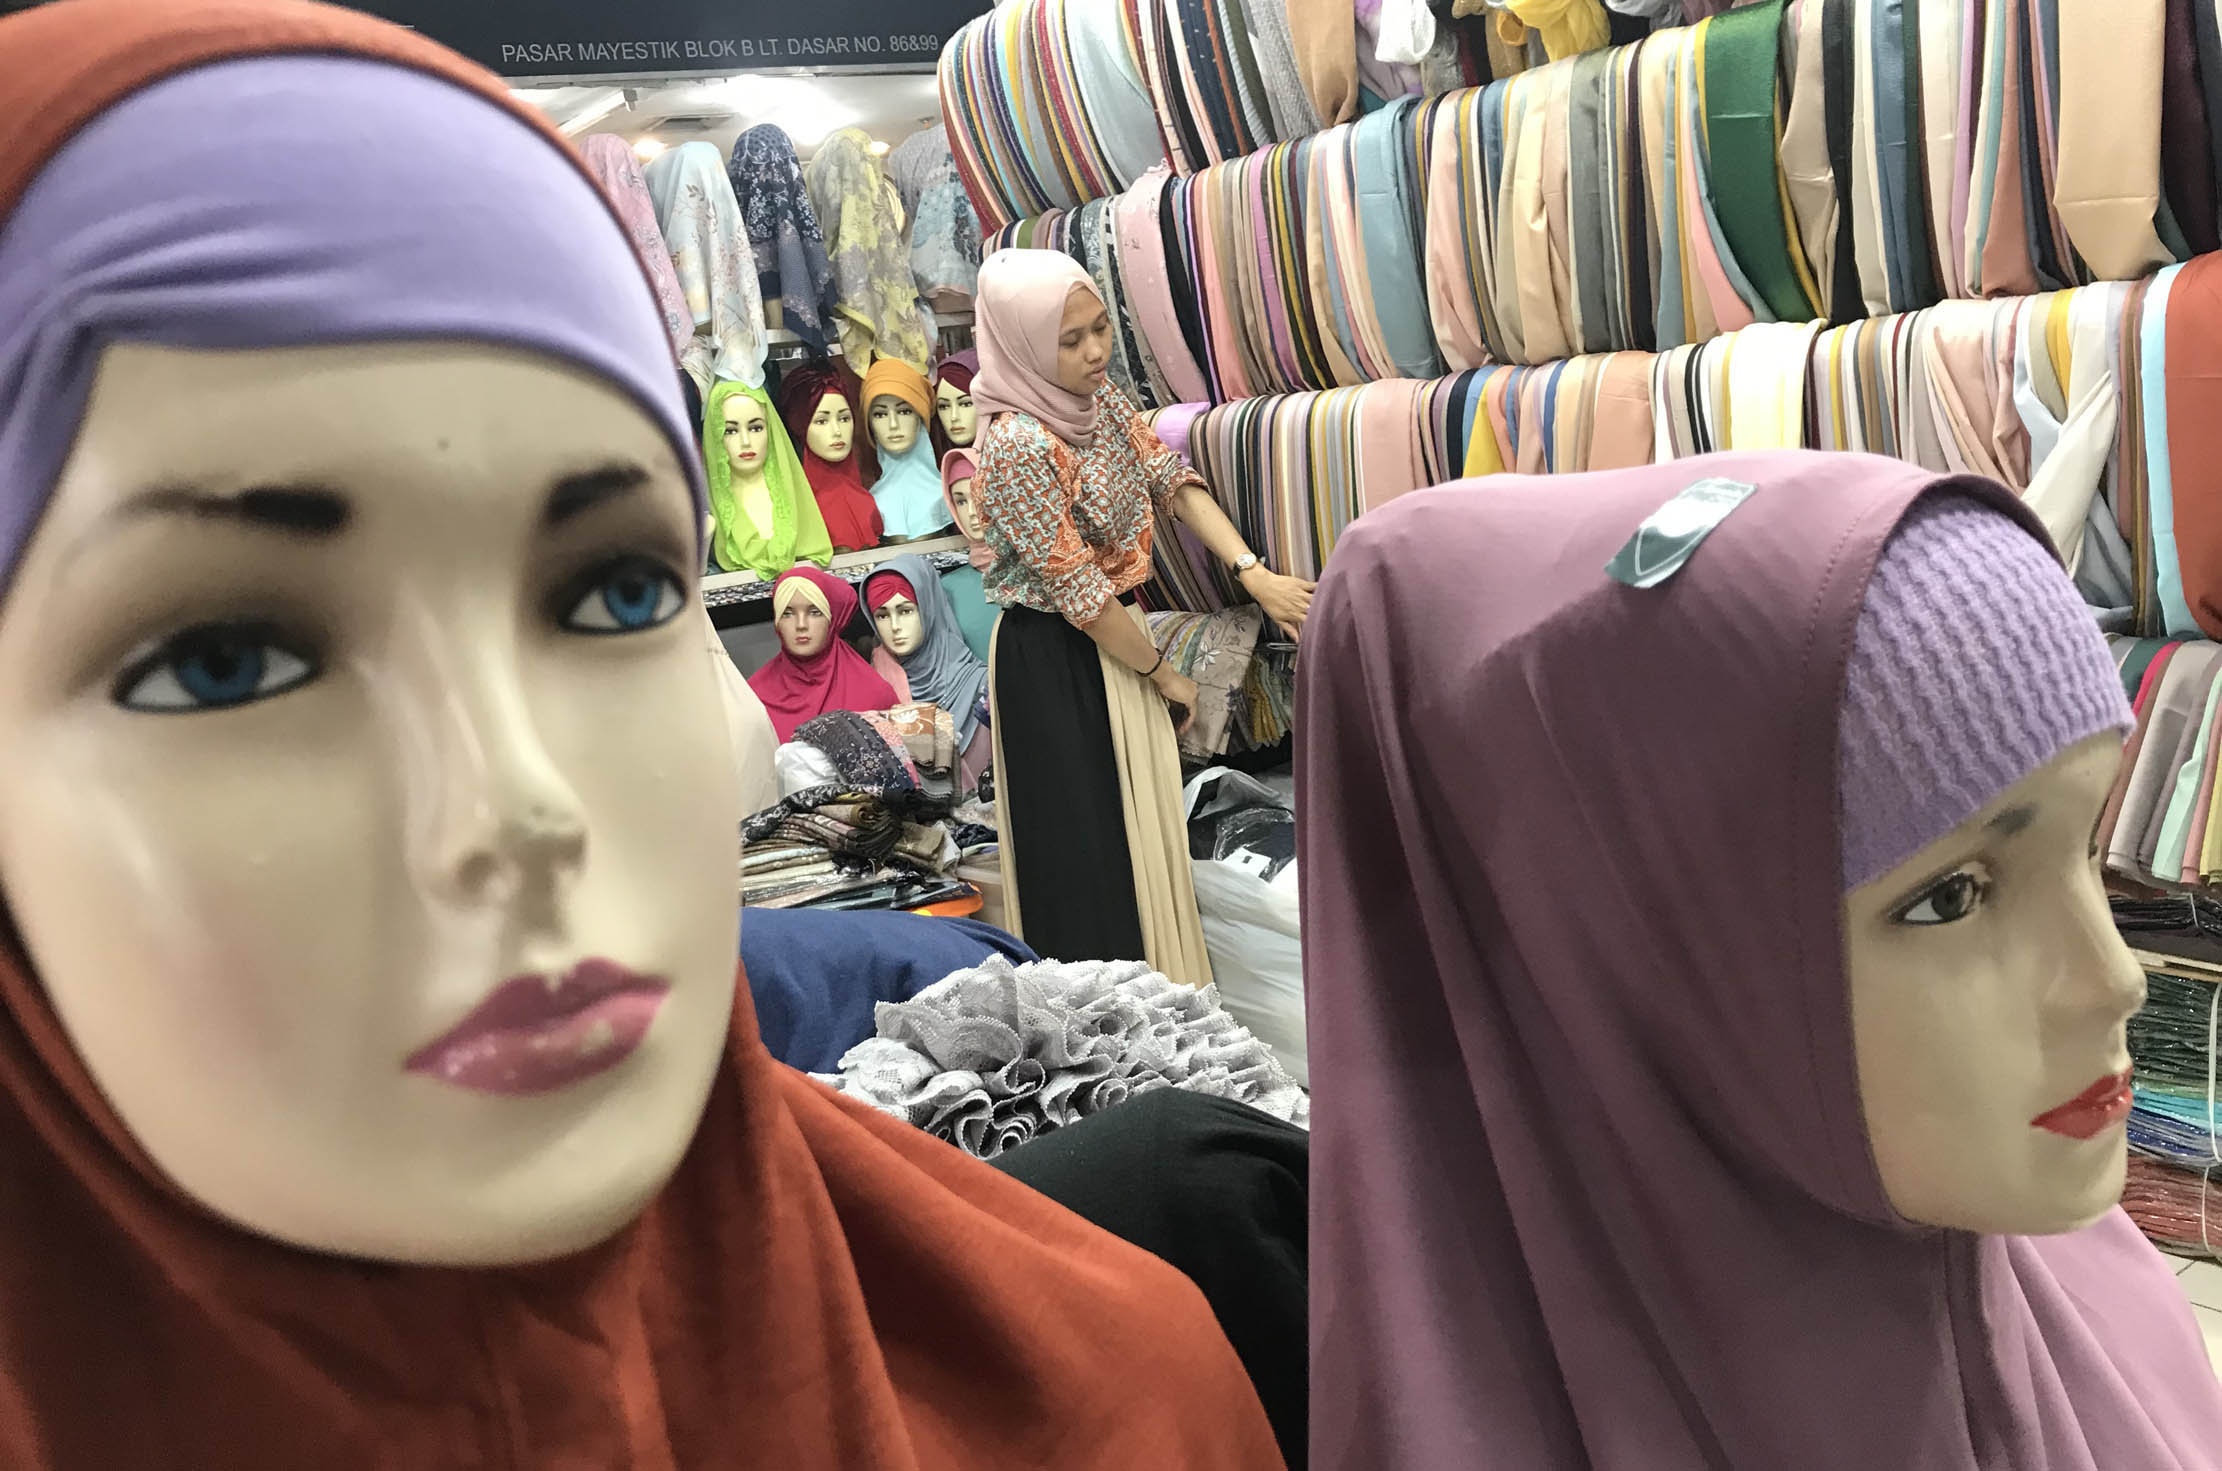 Aktifitas perdagangan busana dan tekstil di kawasan Pasar Mayestik Jakarta, Senin 26 September 2022. Foto : Panji Asmoro/TrenAsia